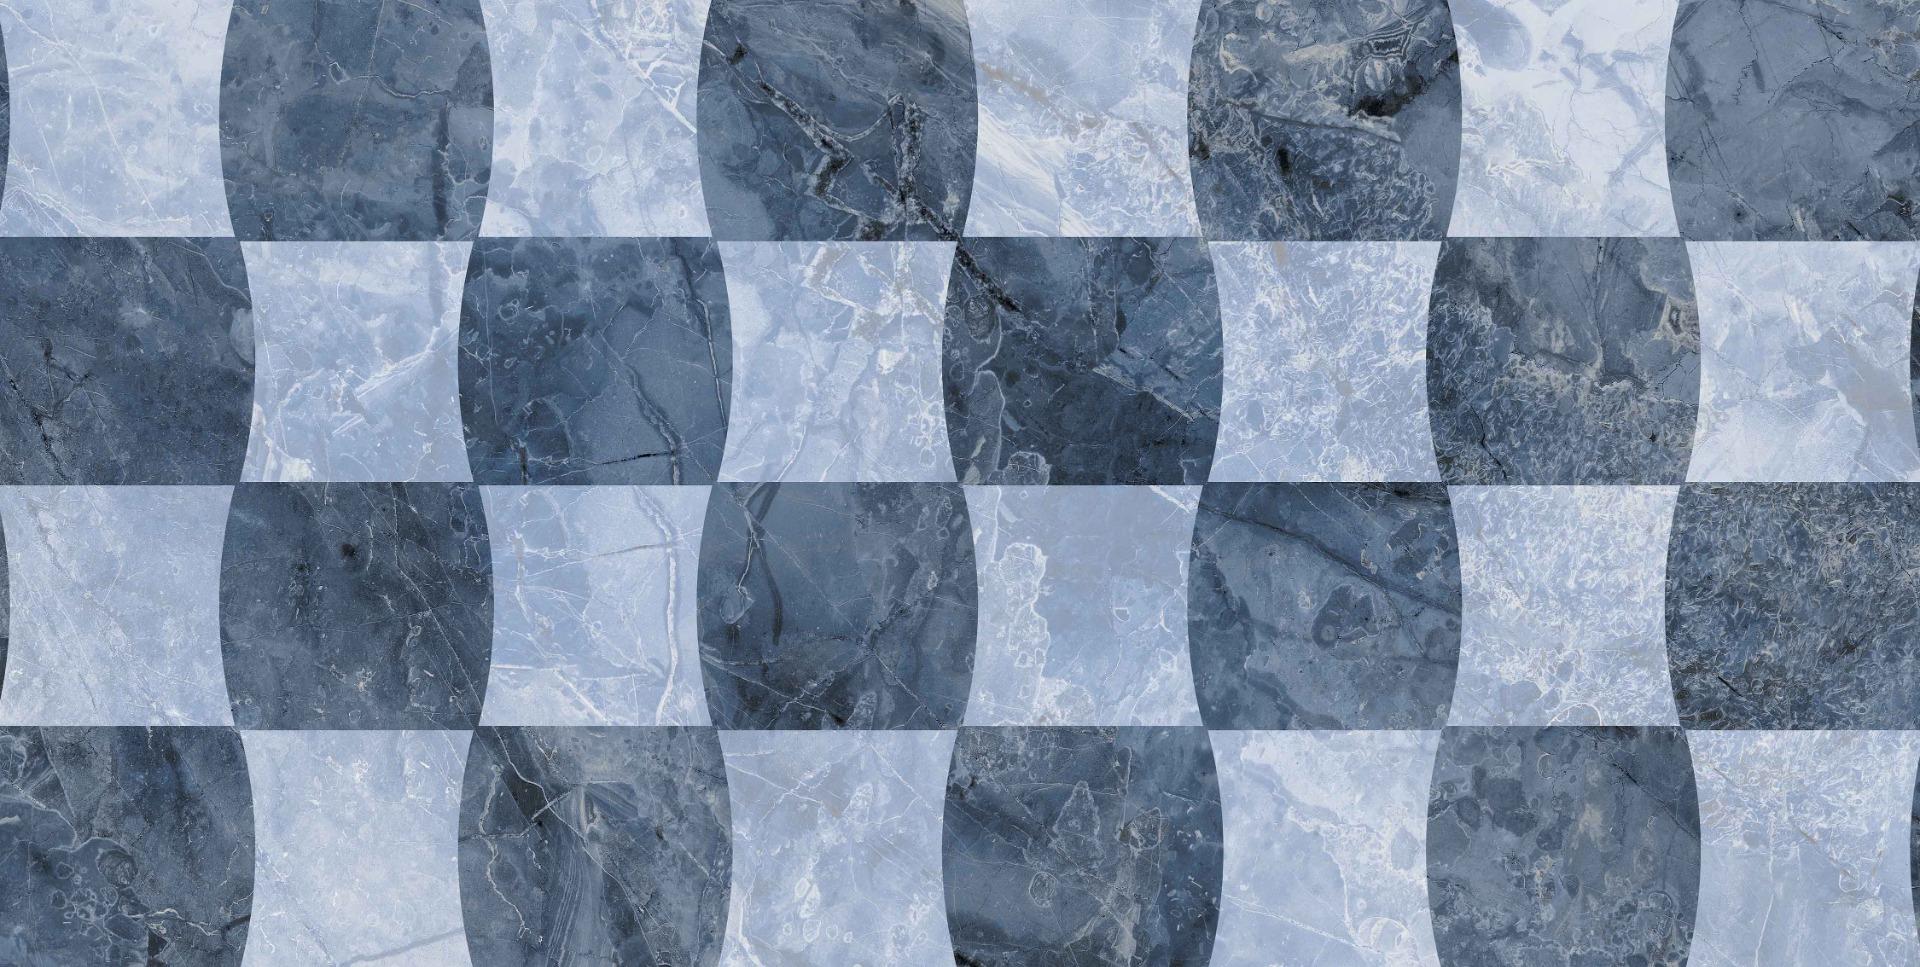 Blue Tiles for Bathroom Tiles, Living Room Tiles, Kitchen Tiles, Bedroom Tiles, Accent Tiles, Hospital Tiles, High Traffic Tiles, Bar/Restaurant, Commercial/Office, School & Collages